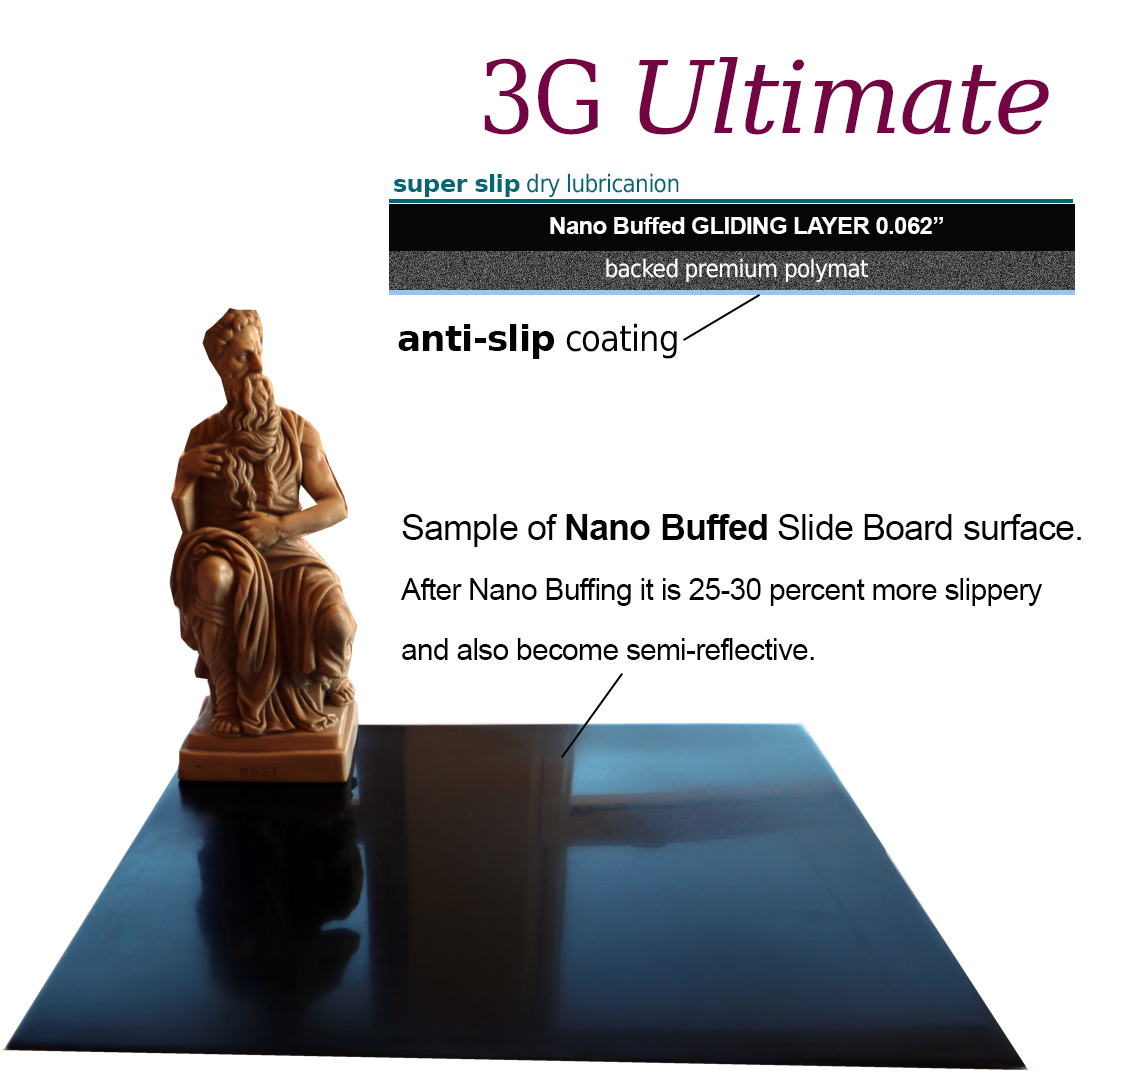 3G Ultimate Slide Board nano buffing.